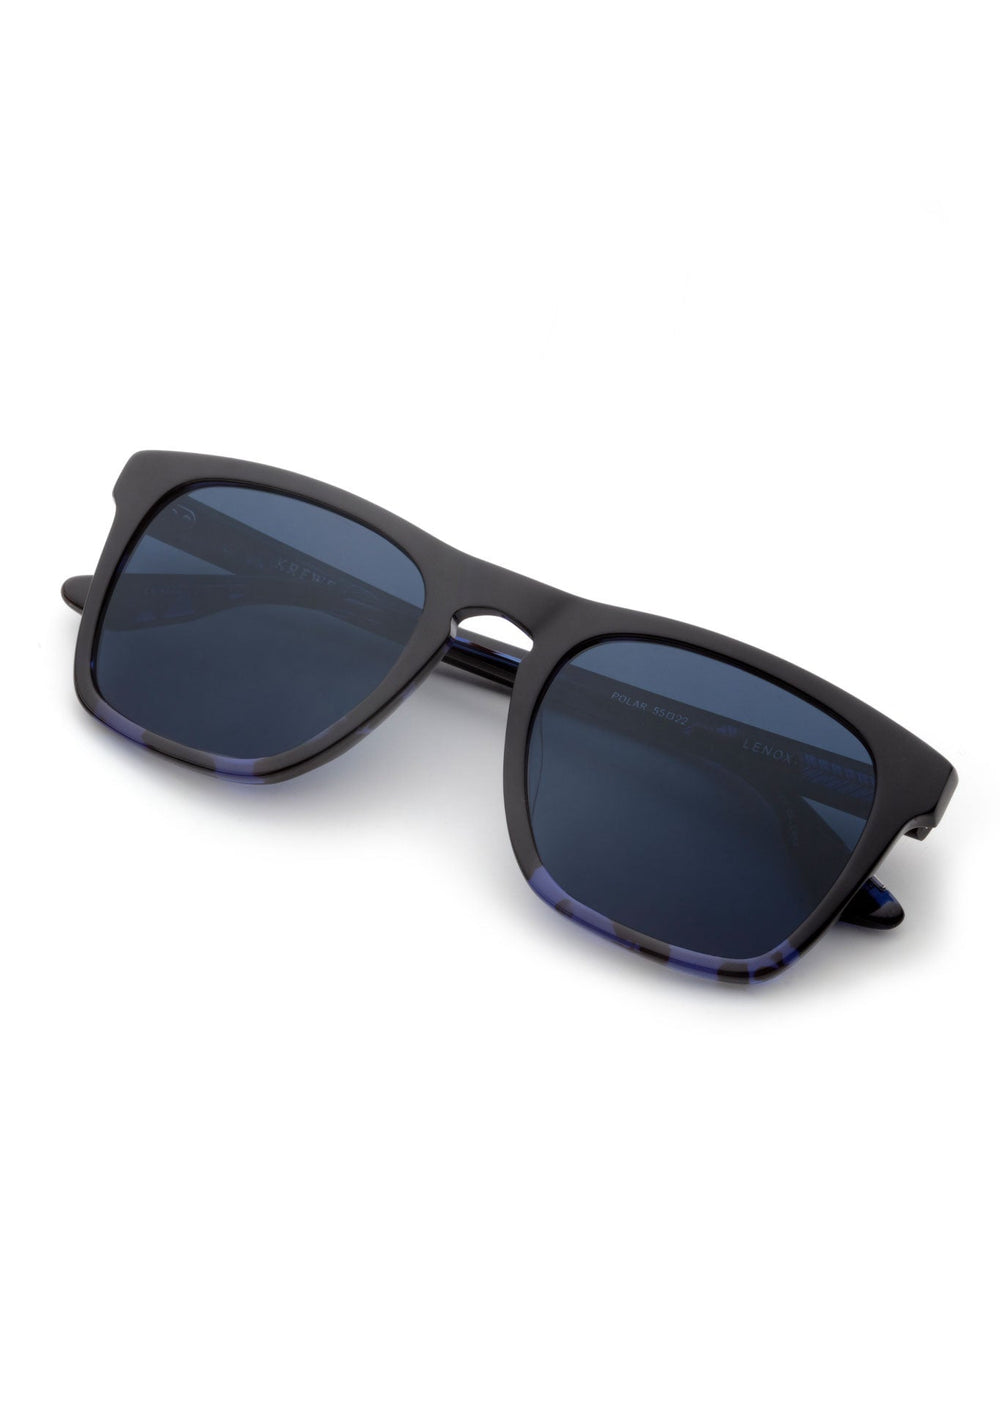 LENOX | Black + Cobalt Polarized Handcrafted, luxury black acetate KREWE sunglasses